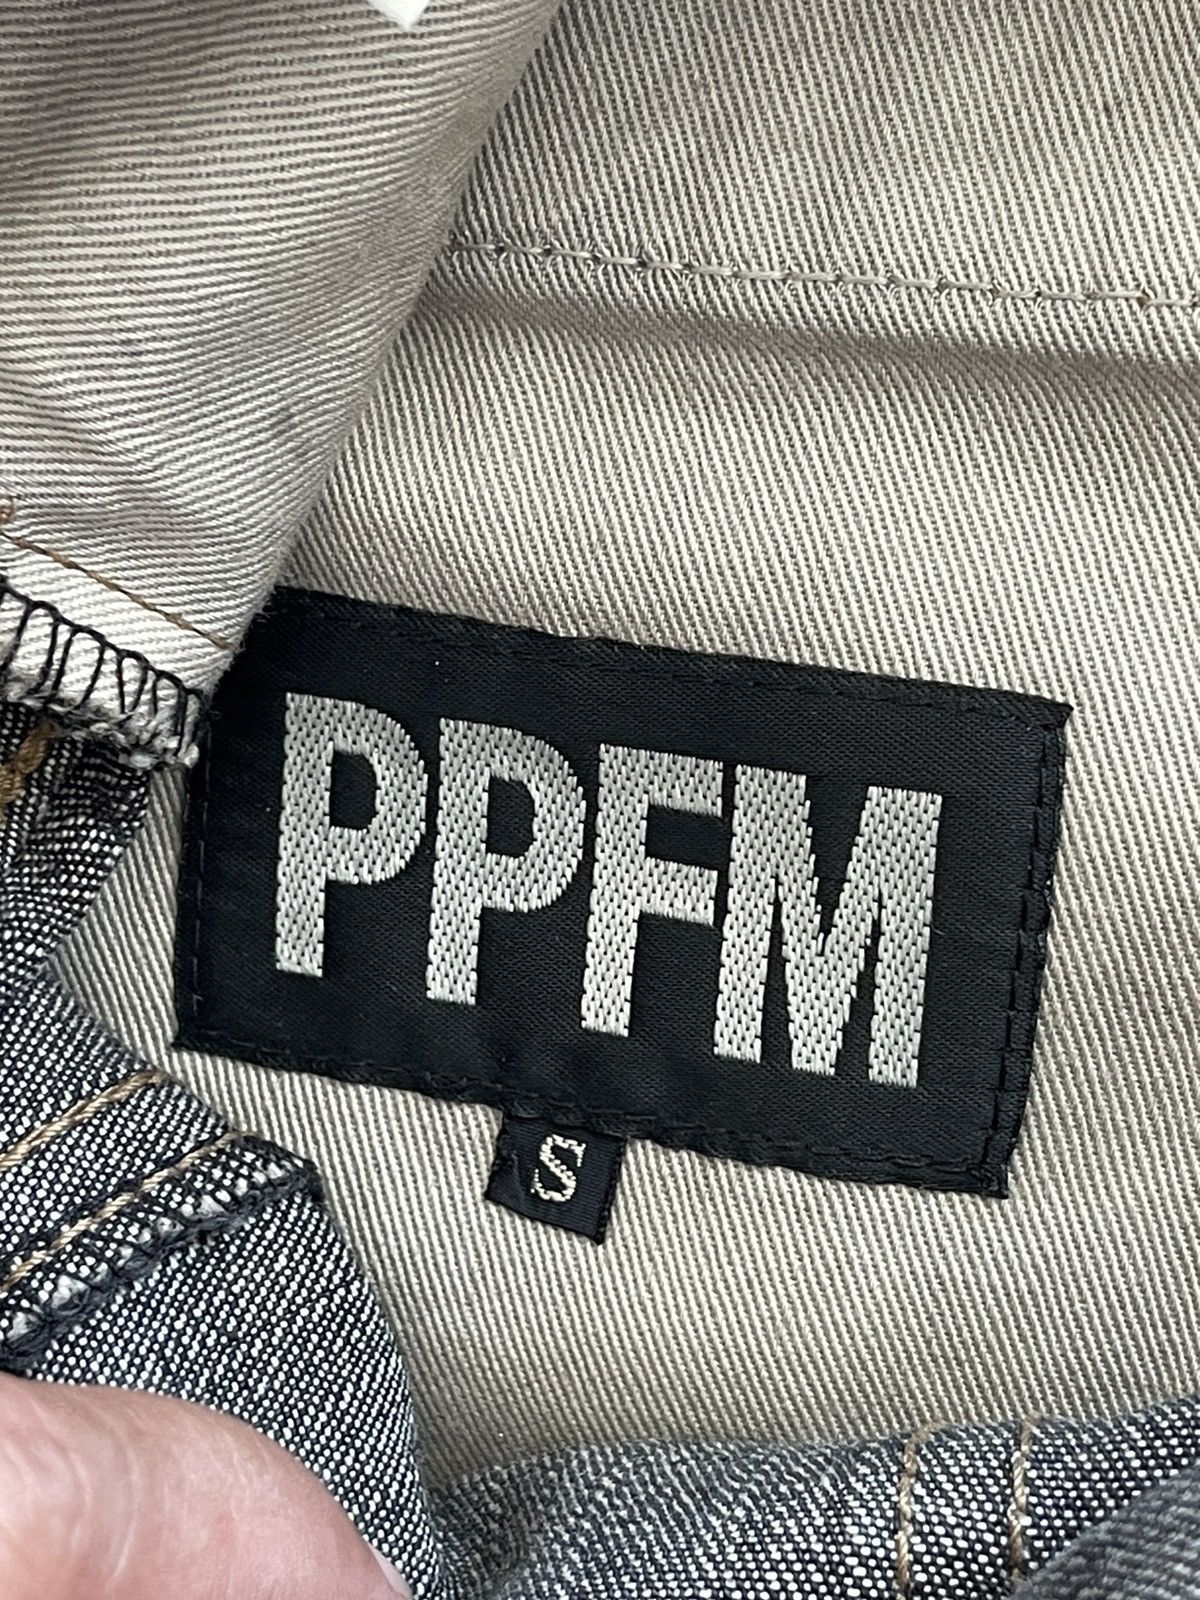 If Six Was Nine - PPFM multi pocket pant - 3